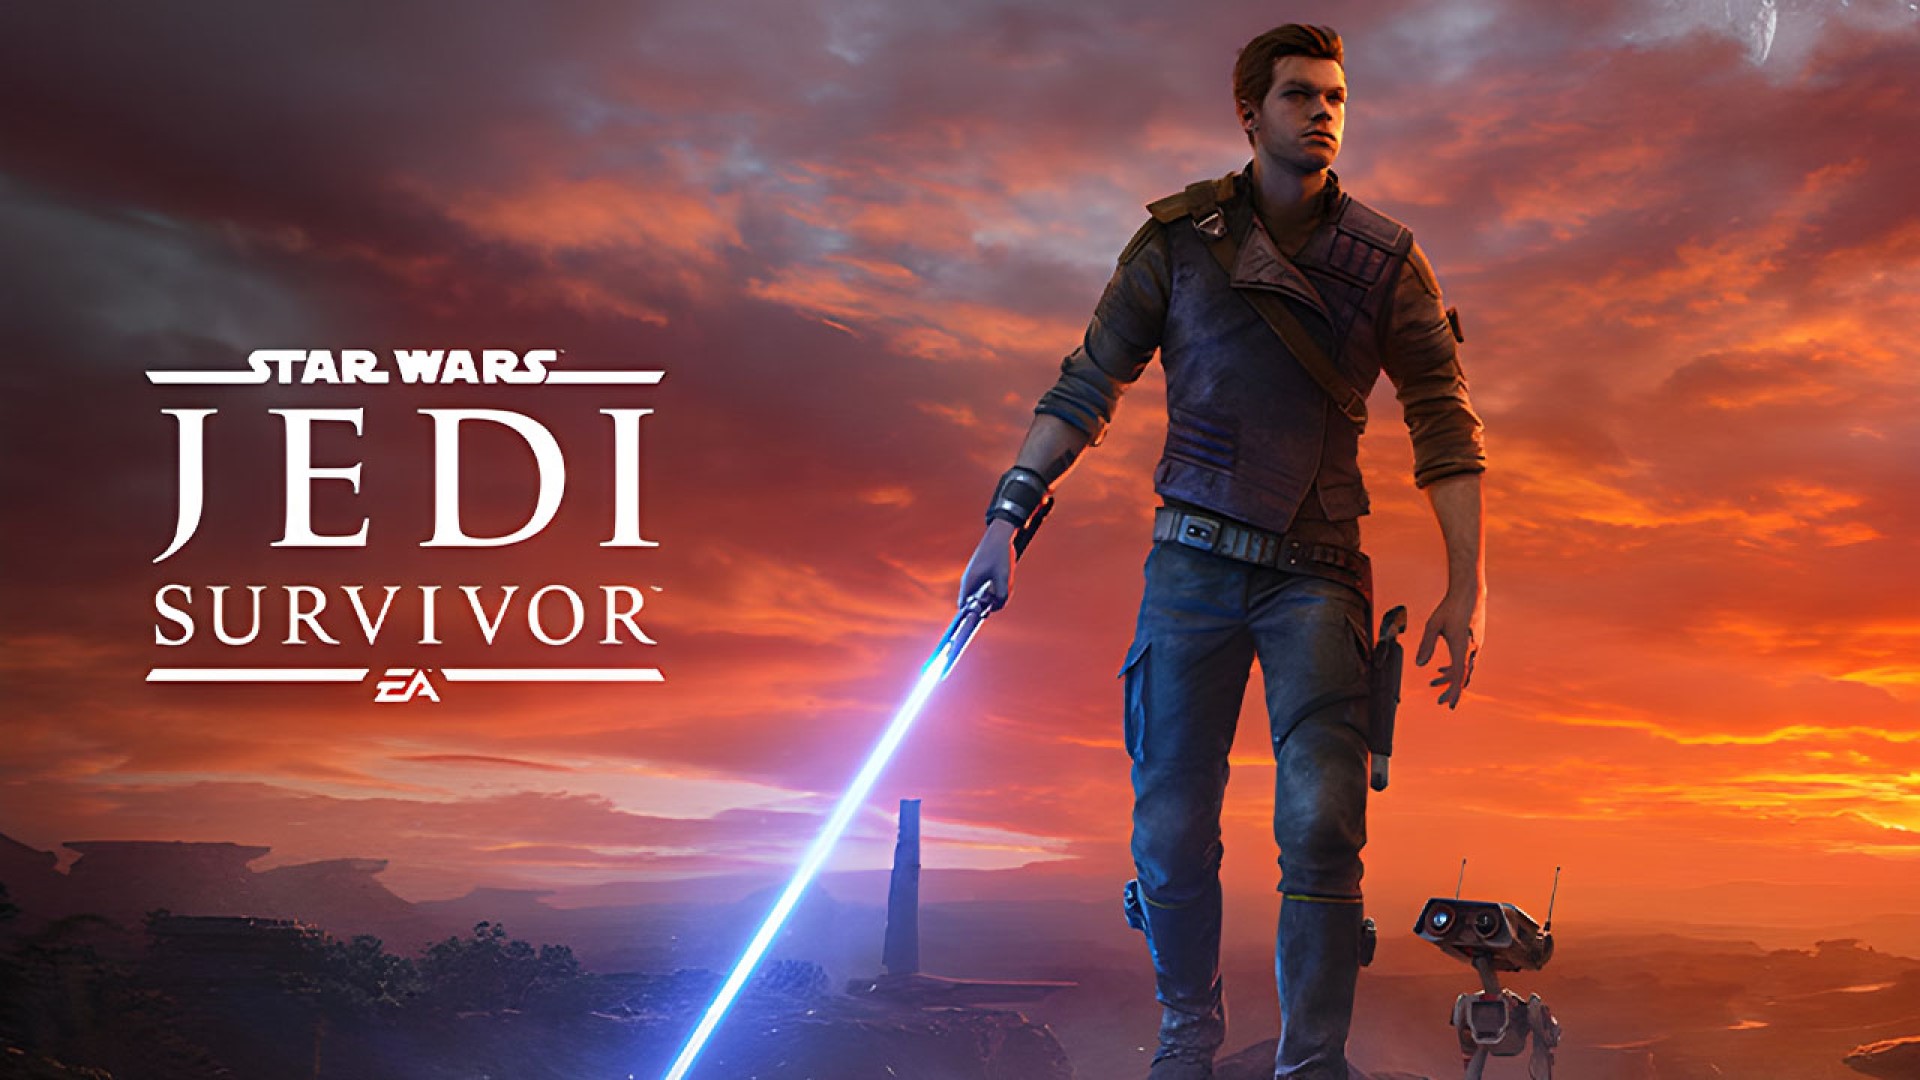 Star Wars Jedi: Survivor در صدر جدول فروش هفتگی بریتانیا قرار گرفت